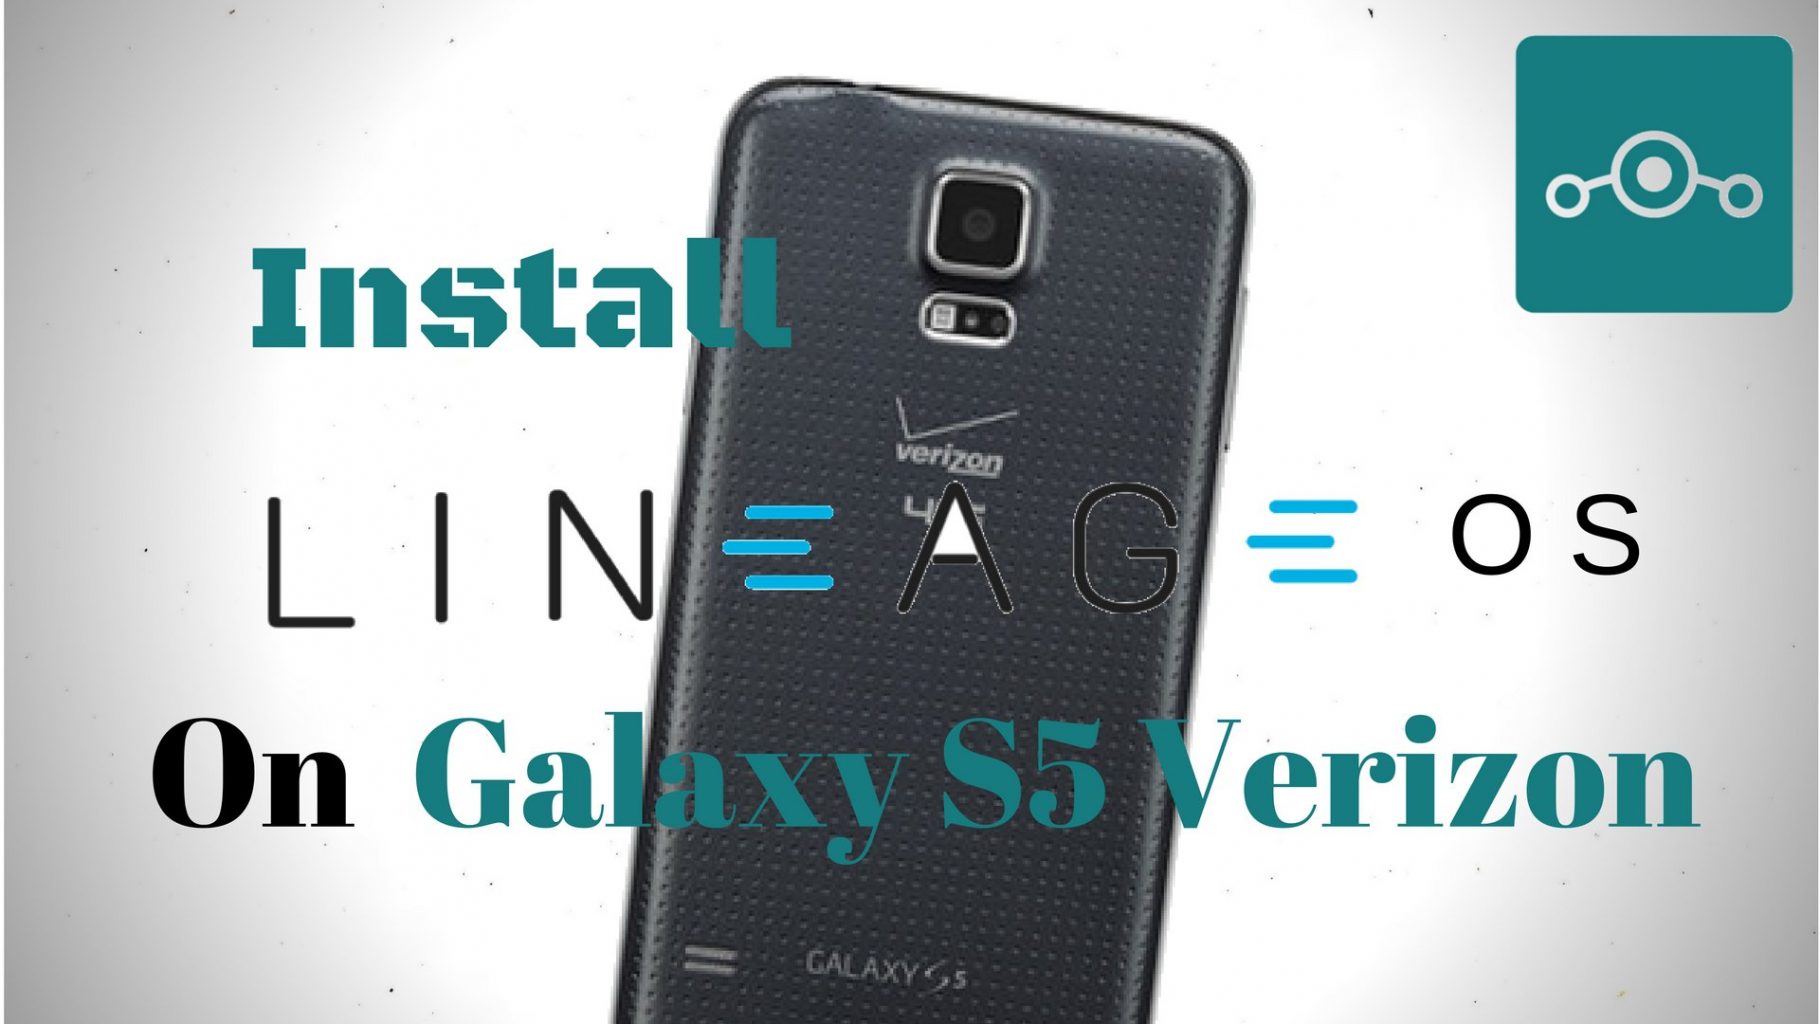 Lineage OS on Samsung Galaxy S5 Verizon